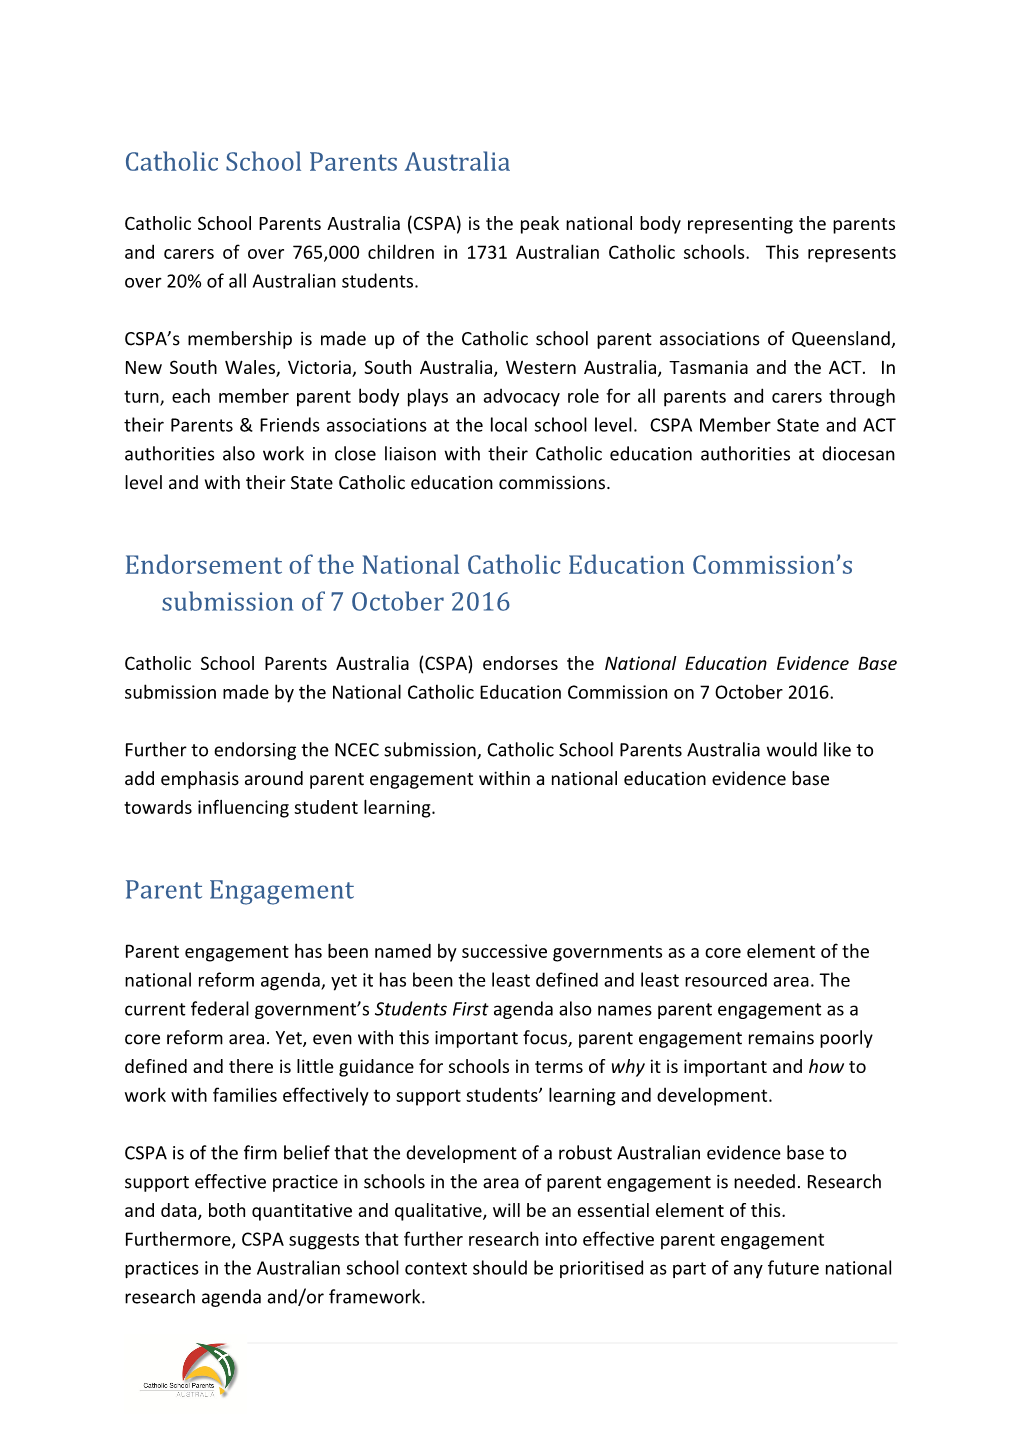 Submission DR130 - Catholic School Parents Australia (CSPA) - Education Evidence Base